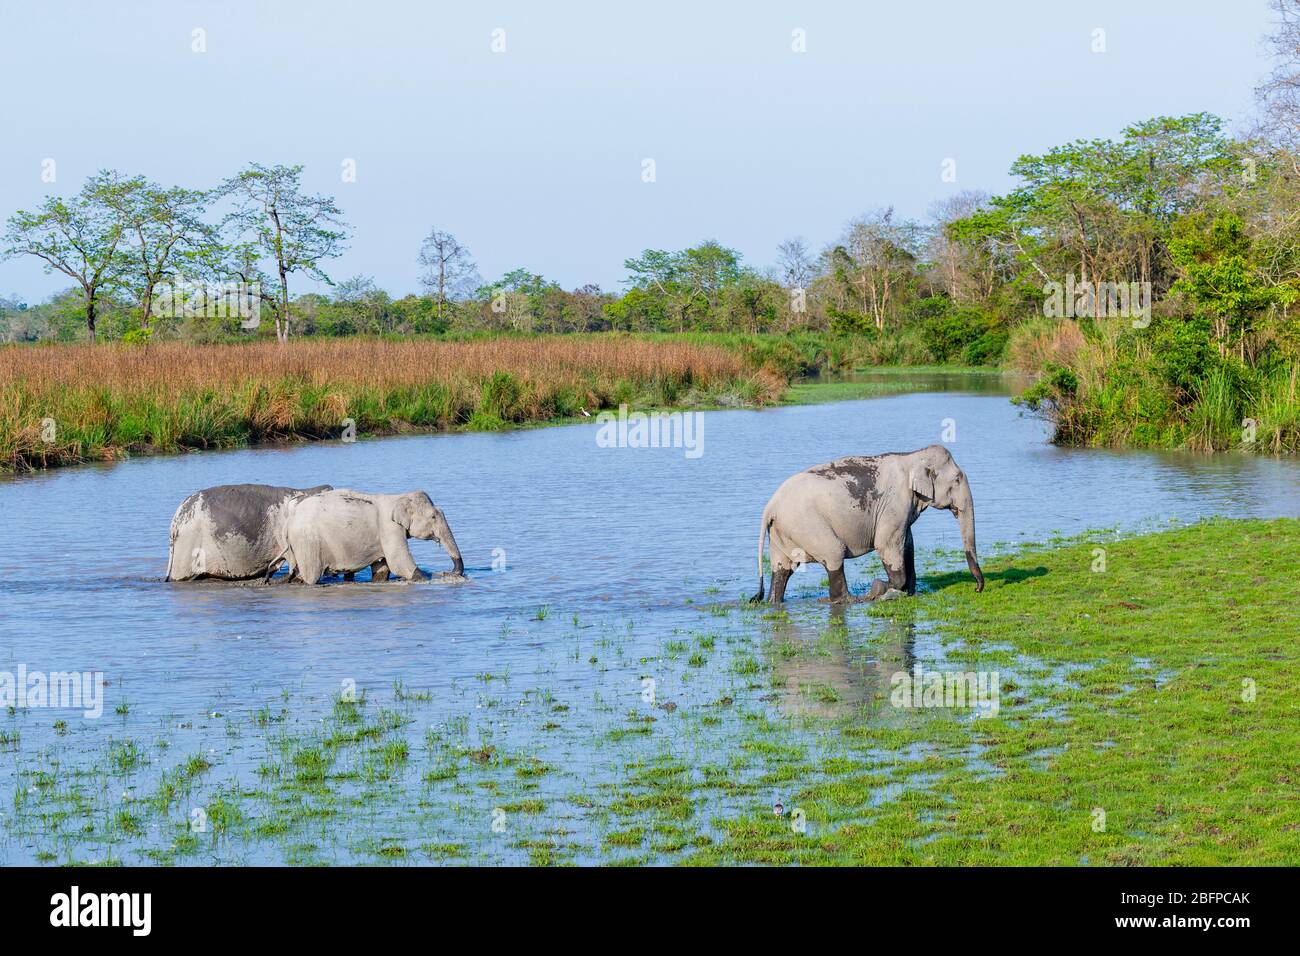 Three Indian elephants (Elephas maximus indicus) crossing a river in Kaziranga National Park, Assam, northeastern India Stock Photo